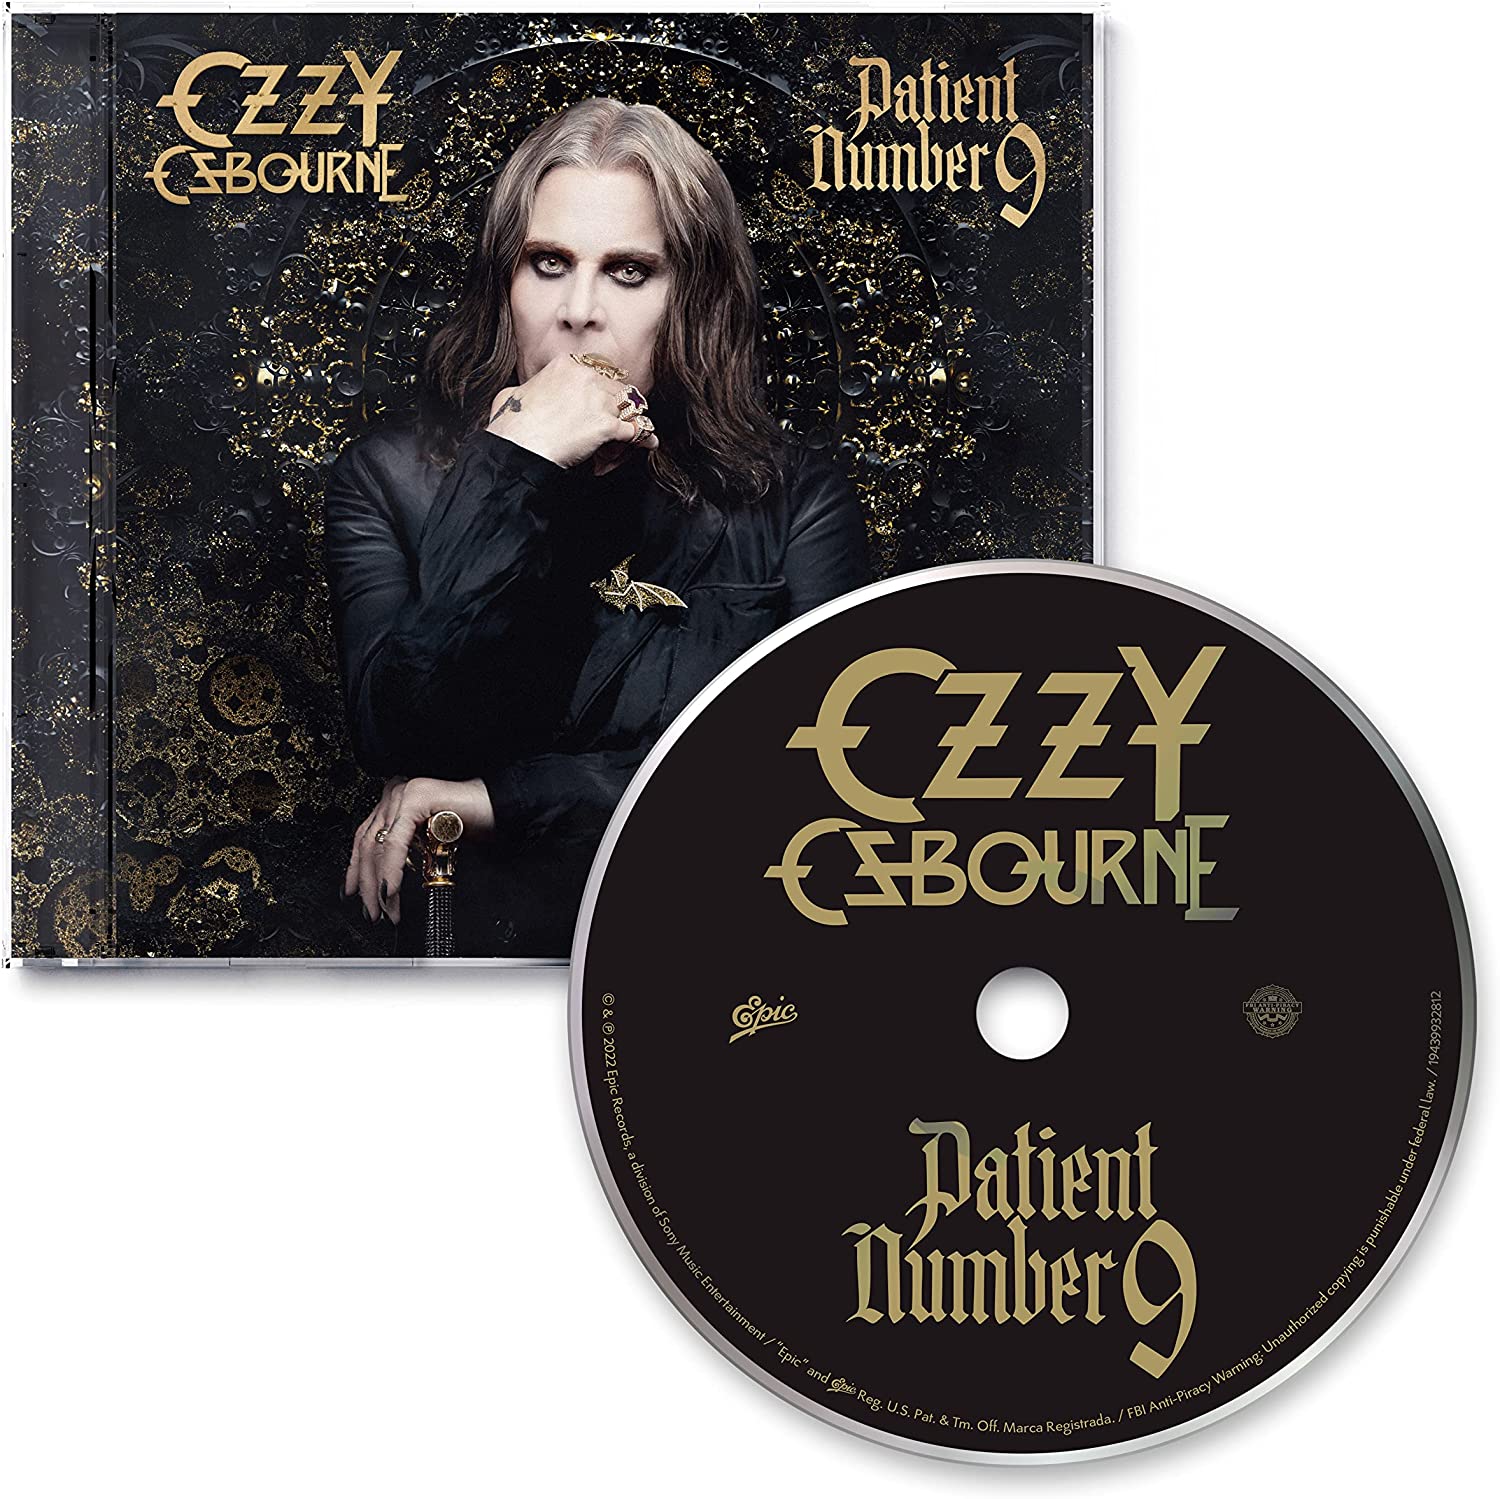 Patient Number 9 | Ozzy Osbourne